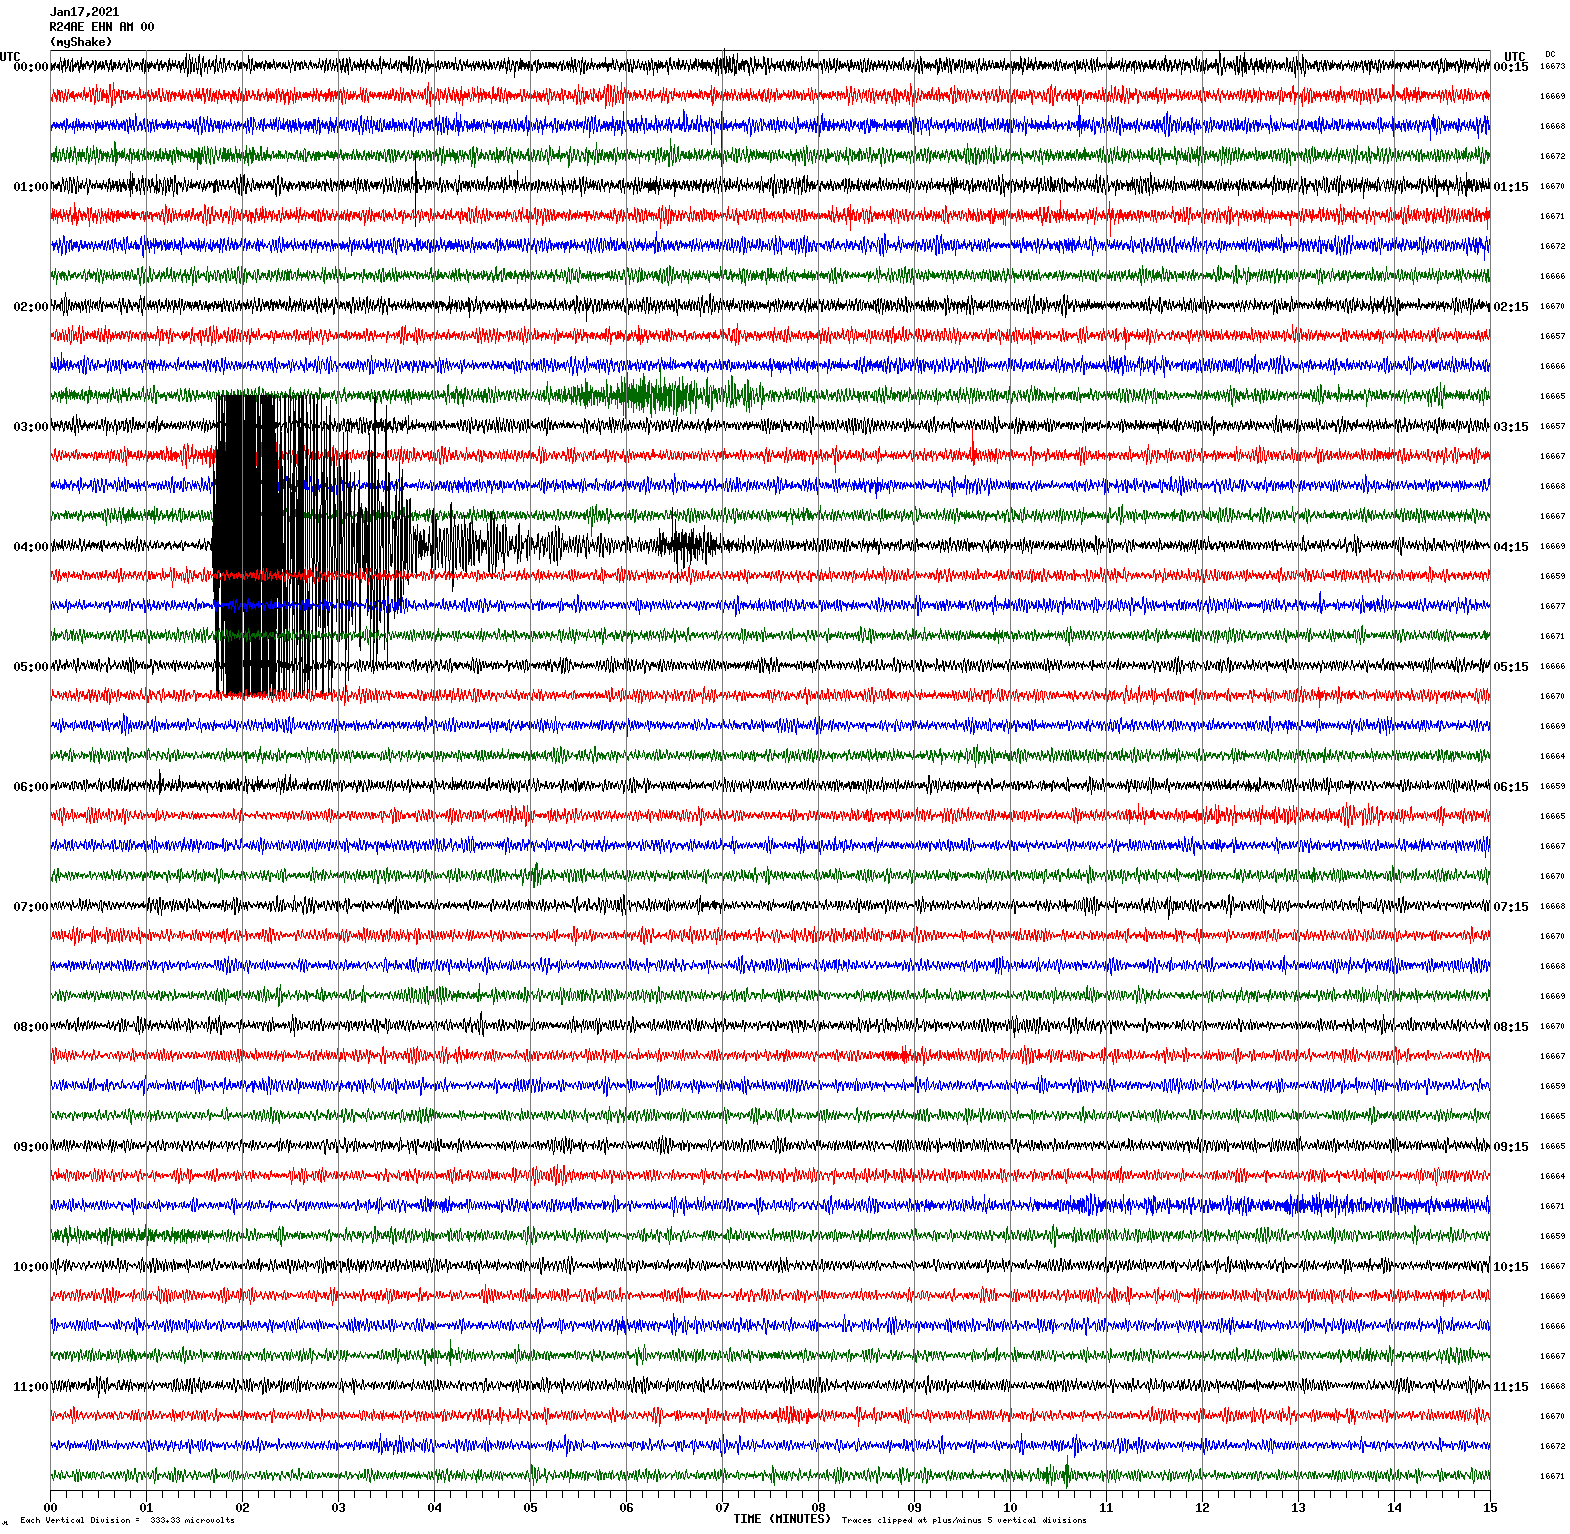 /seismic-data/R24AE/R24AE_EHN_AM_00.2021011700.gif